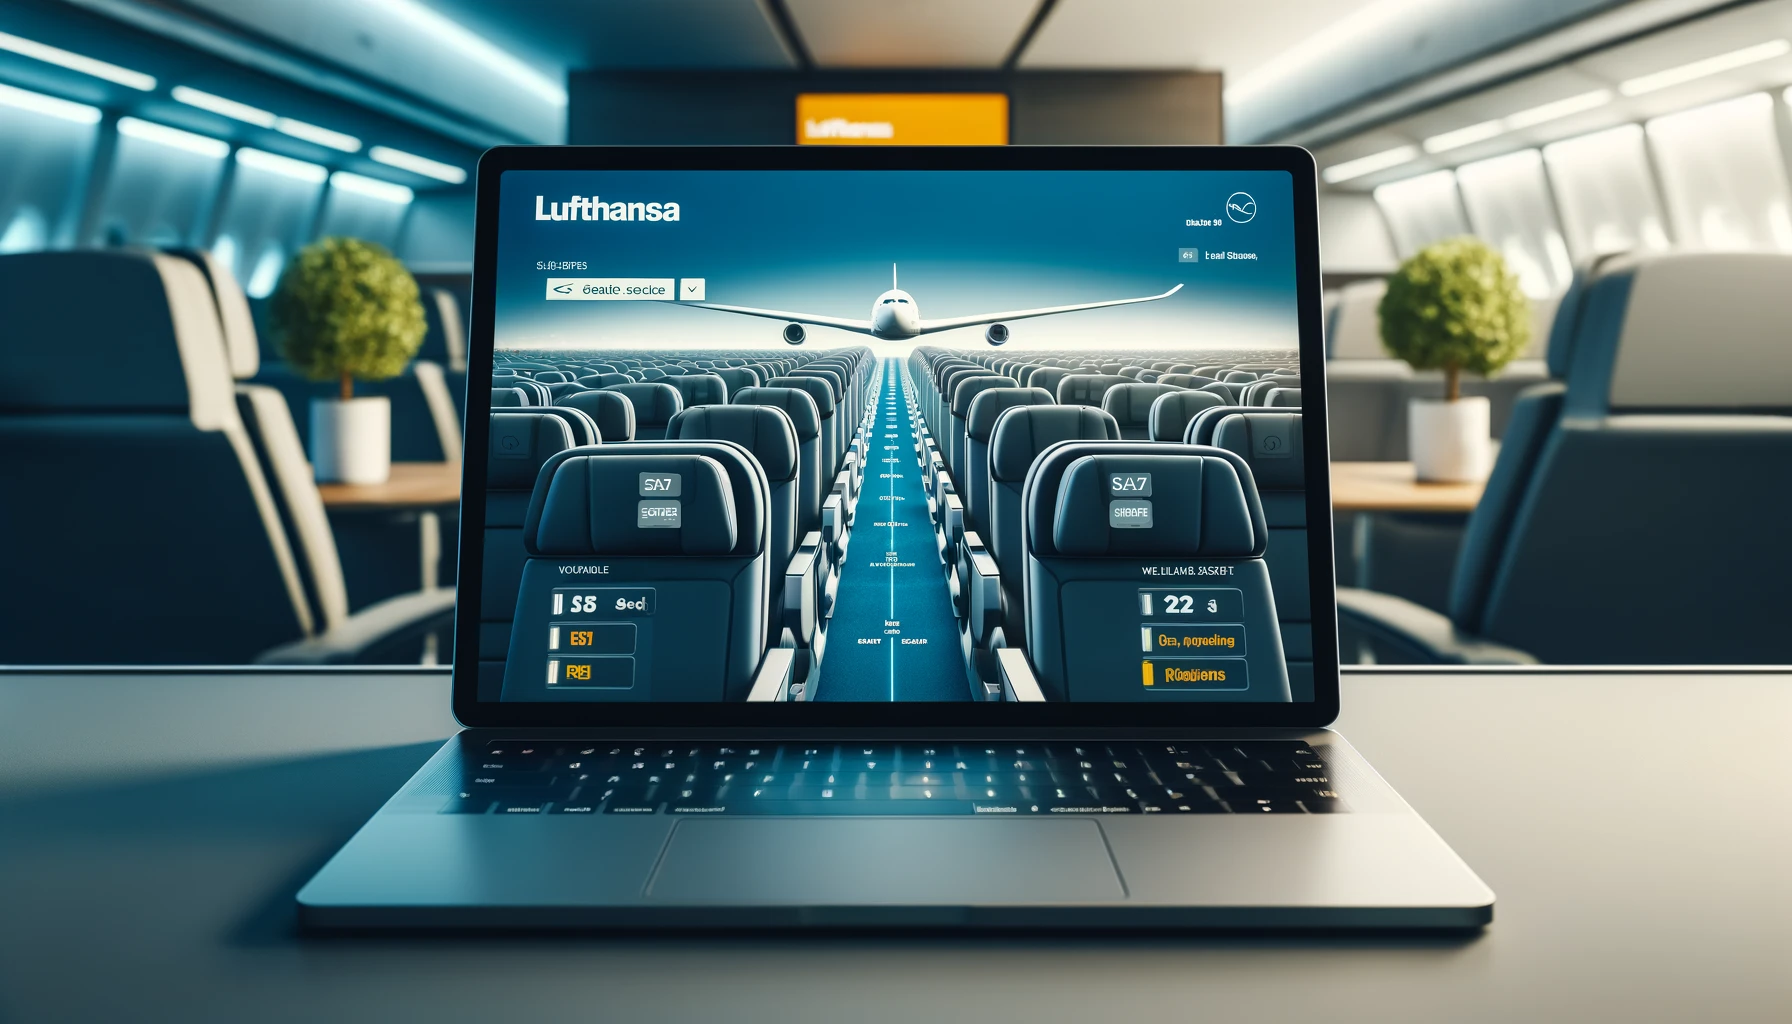 Lufthansa Seat Selection